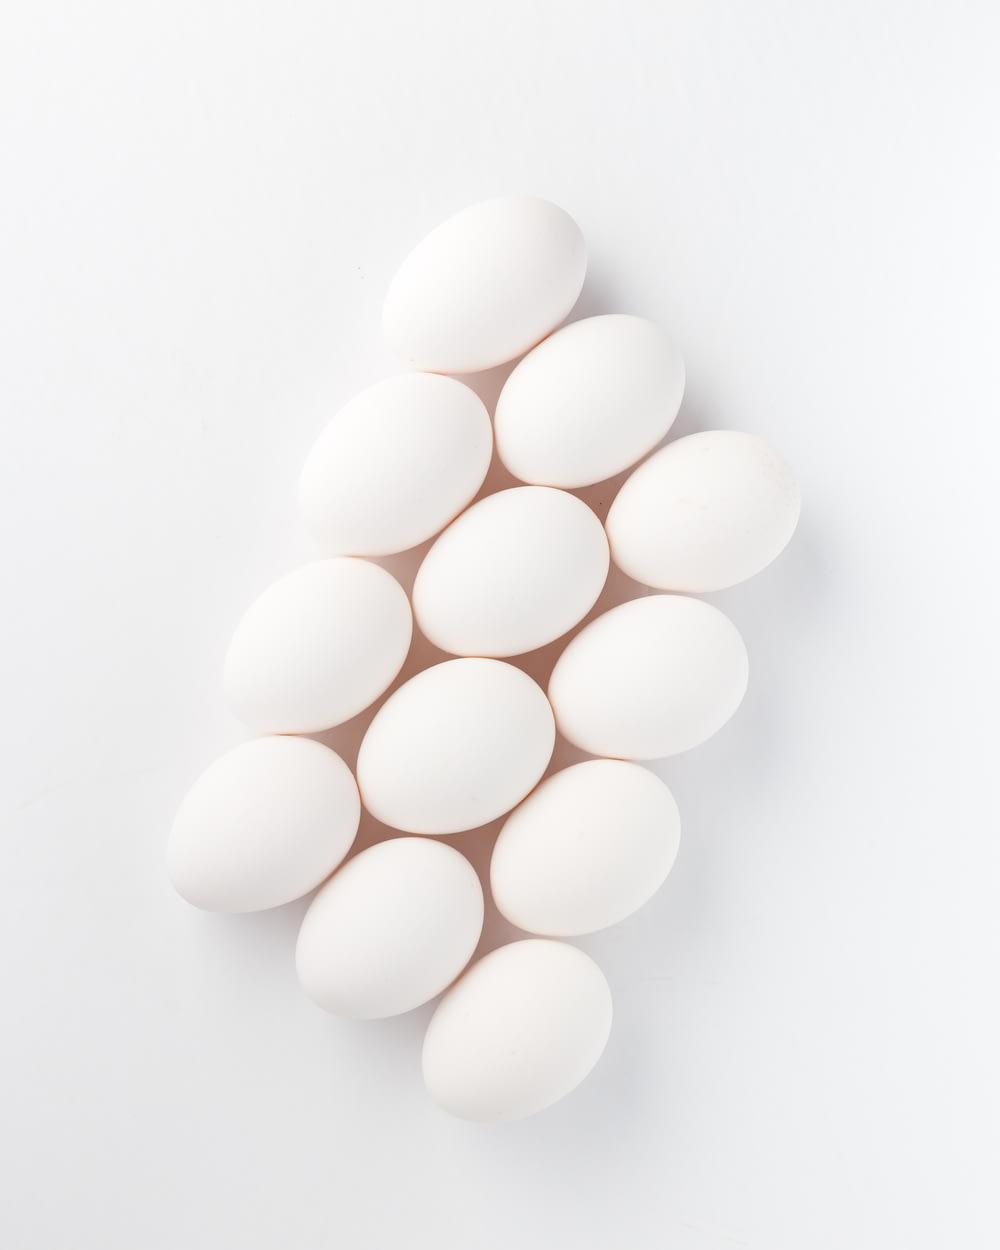 twelve white eggs on white surface